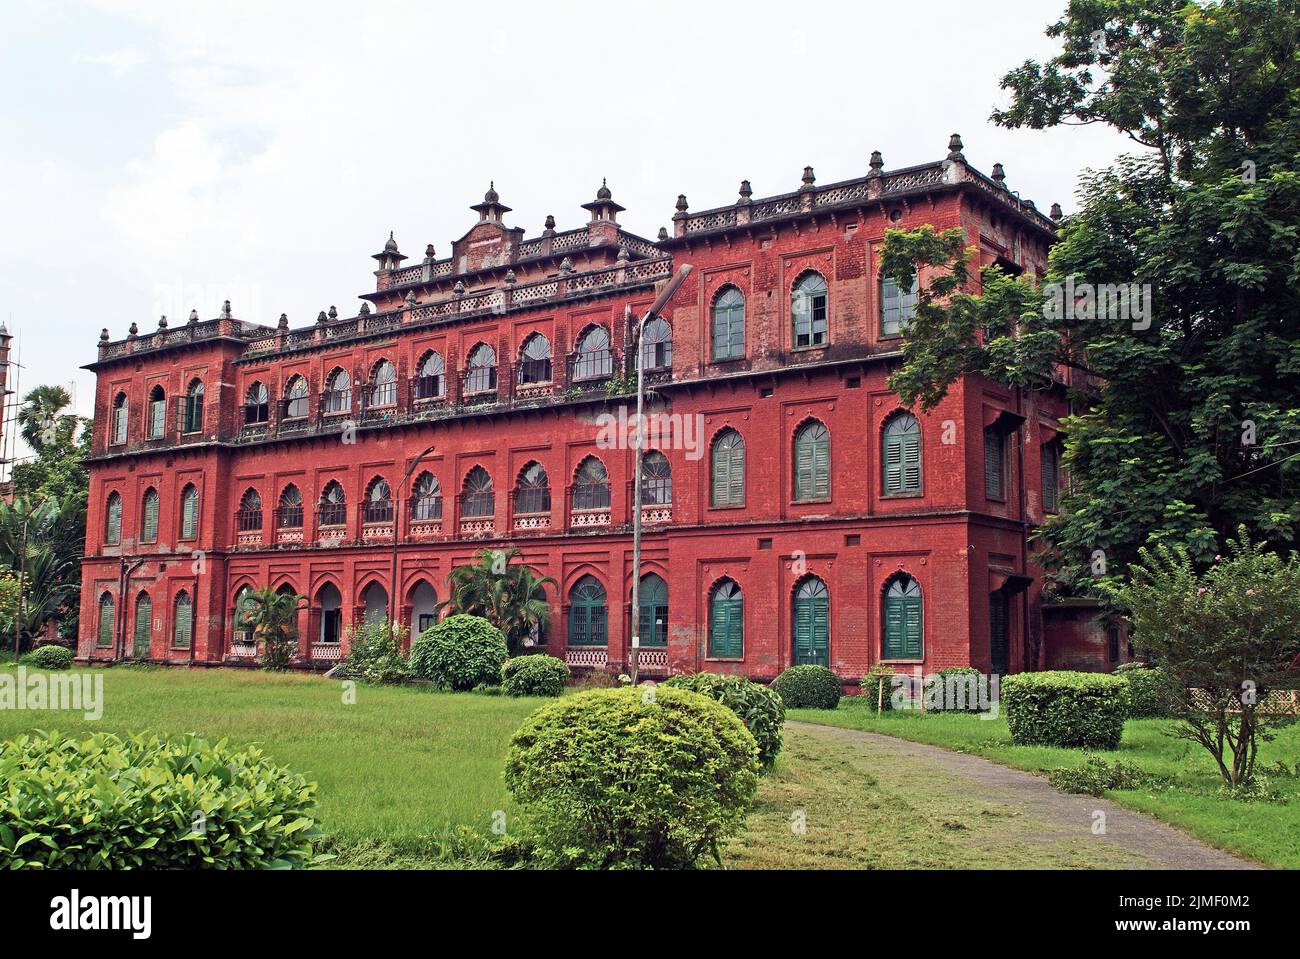 Dhaka, Bangladesh - September 17, 2007: former residence of Lord Curzon - currently part of Dhaka University Stock Photo